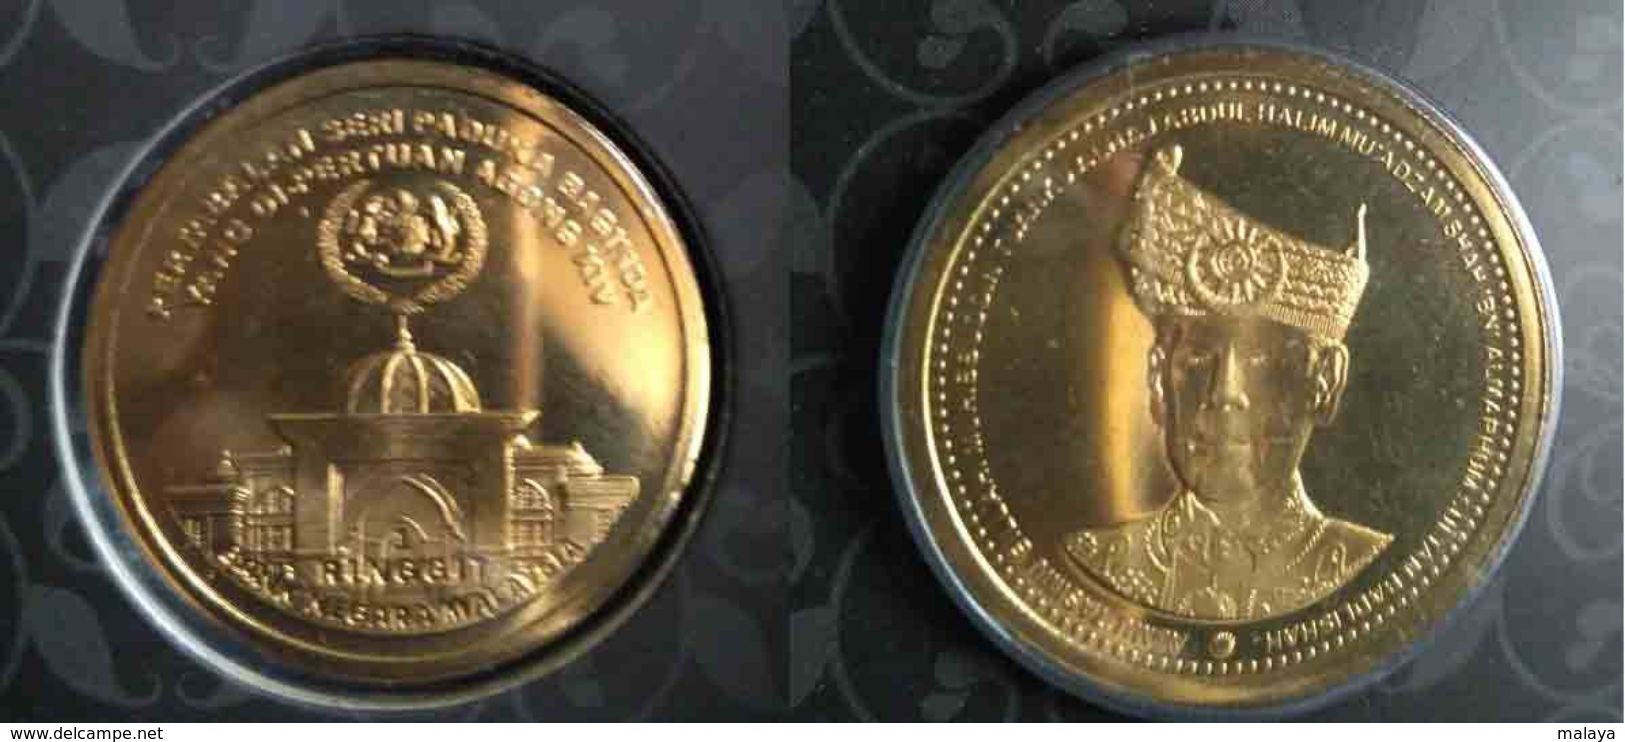 Malaysia 2012 1 Ringgit Coin Installation  Agong Sultan Kedah Nordic Gold (B.U) Commemorative Coin - Malesia